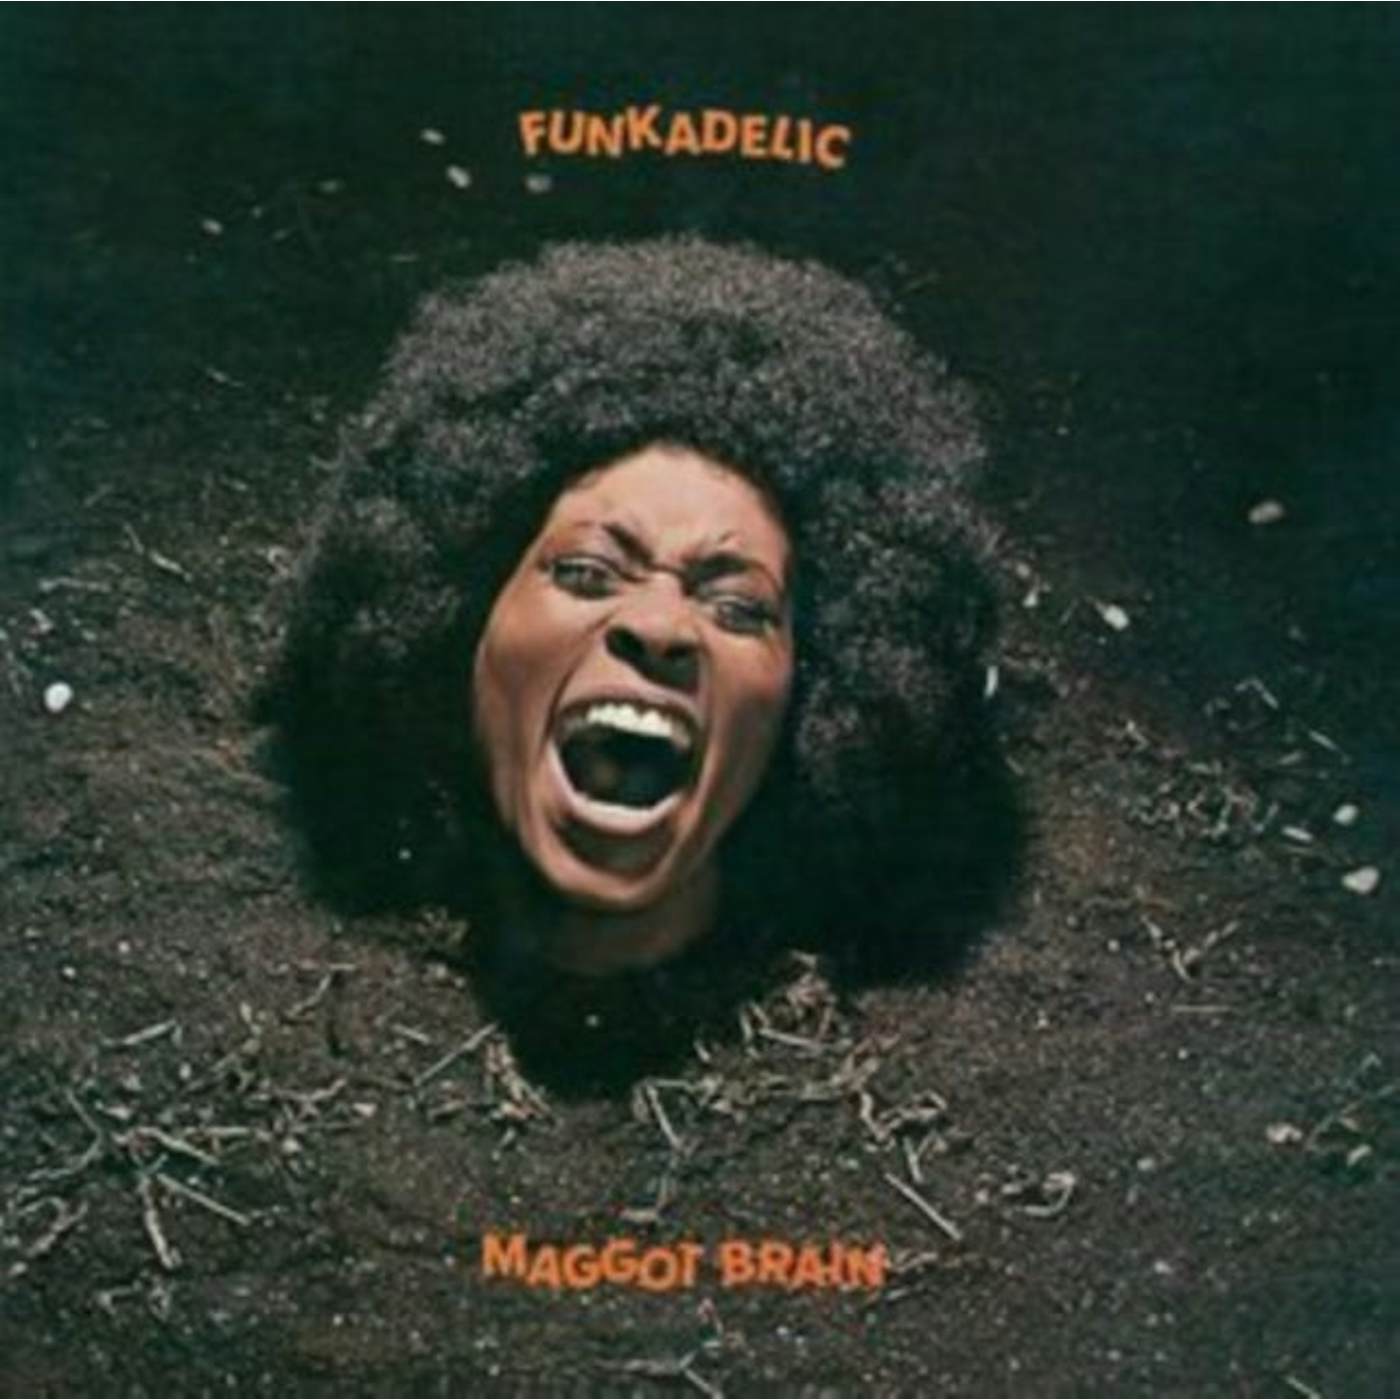 Funkadelic LP Vinyl Record - Maggot Brain (50th Anniversary Edition)